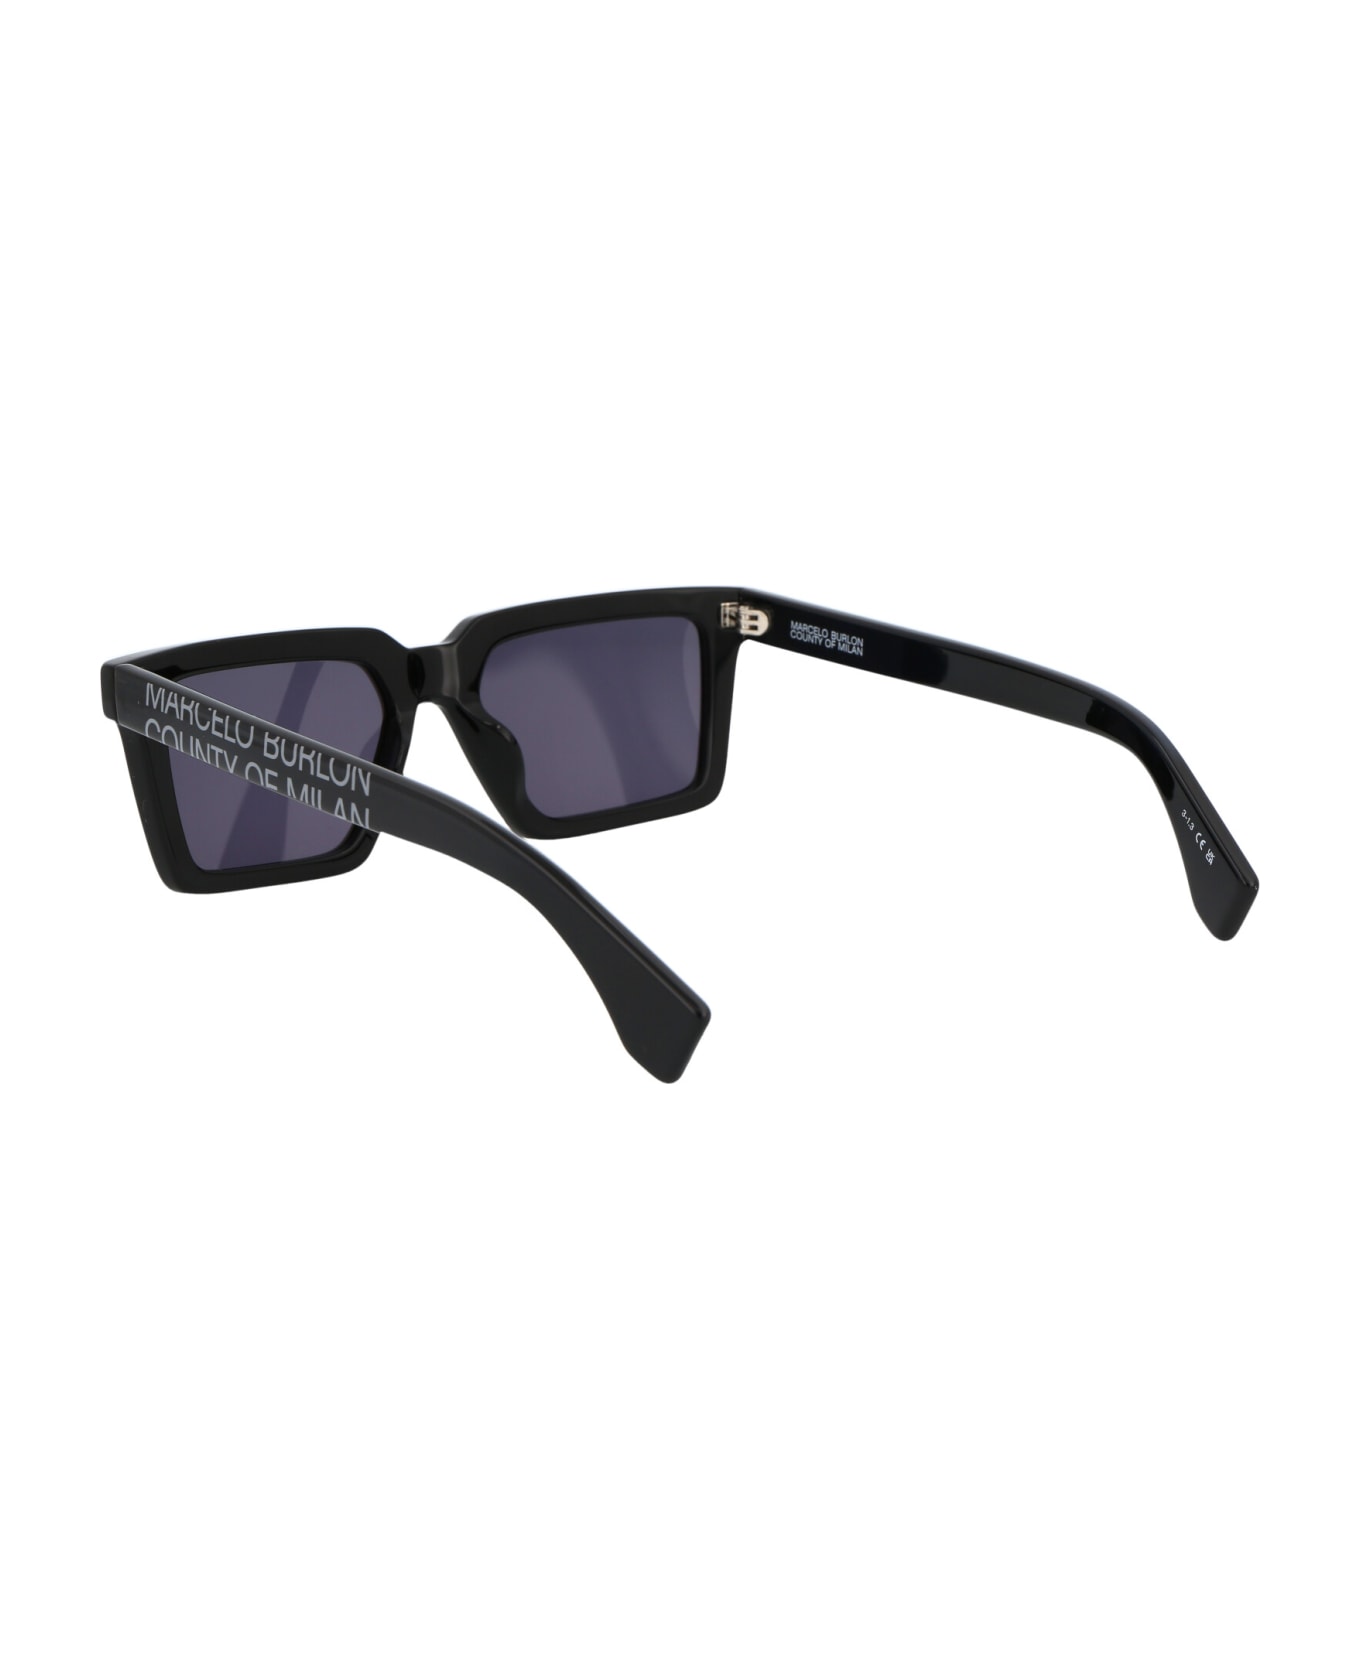 Marcelo Burlon Paramela Sunglasses - 1007 BLACK DARK GREY